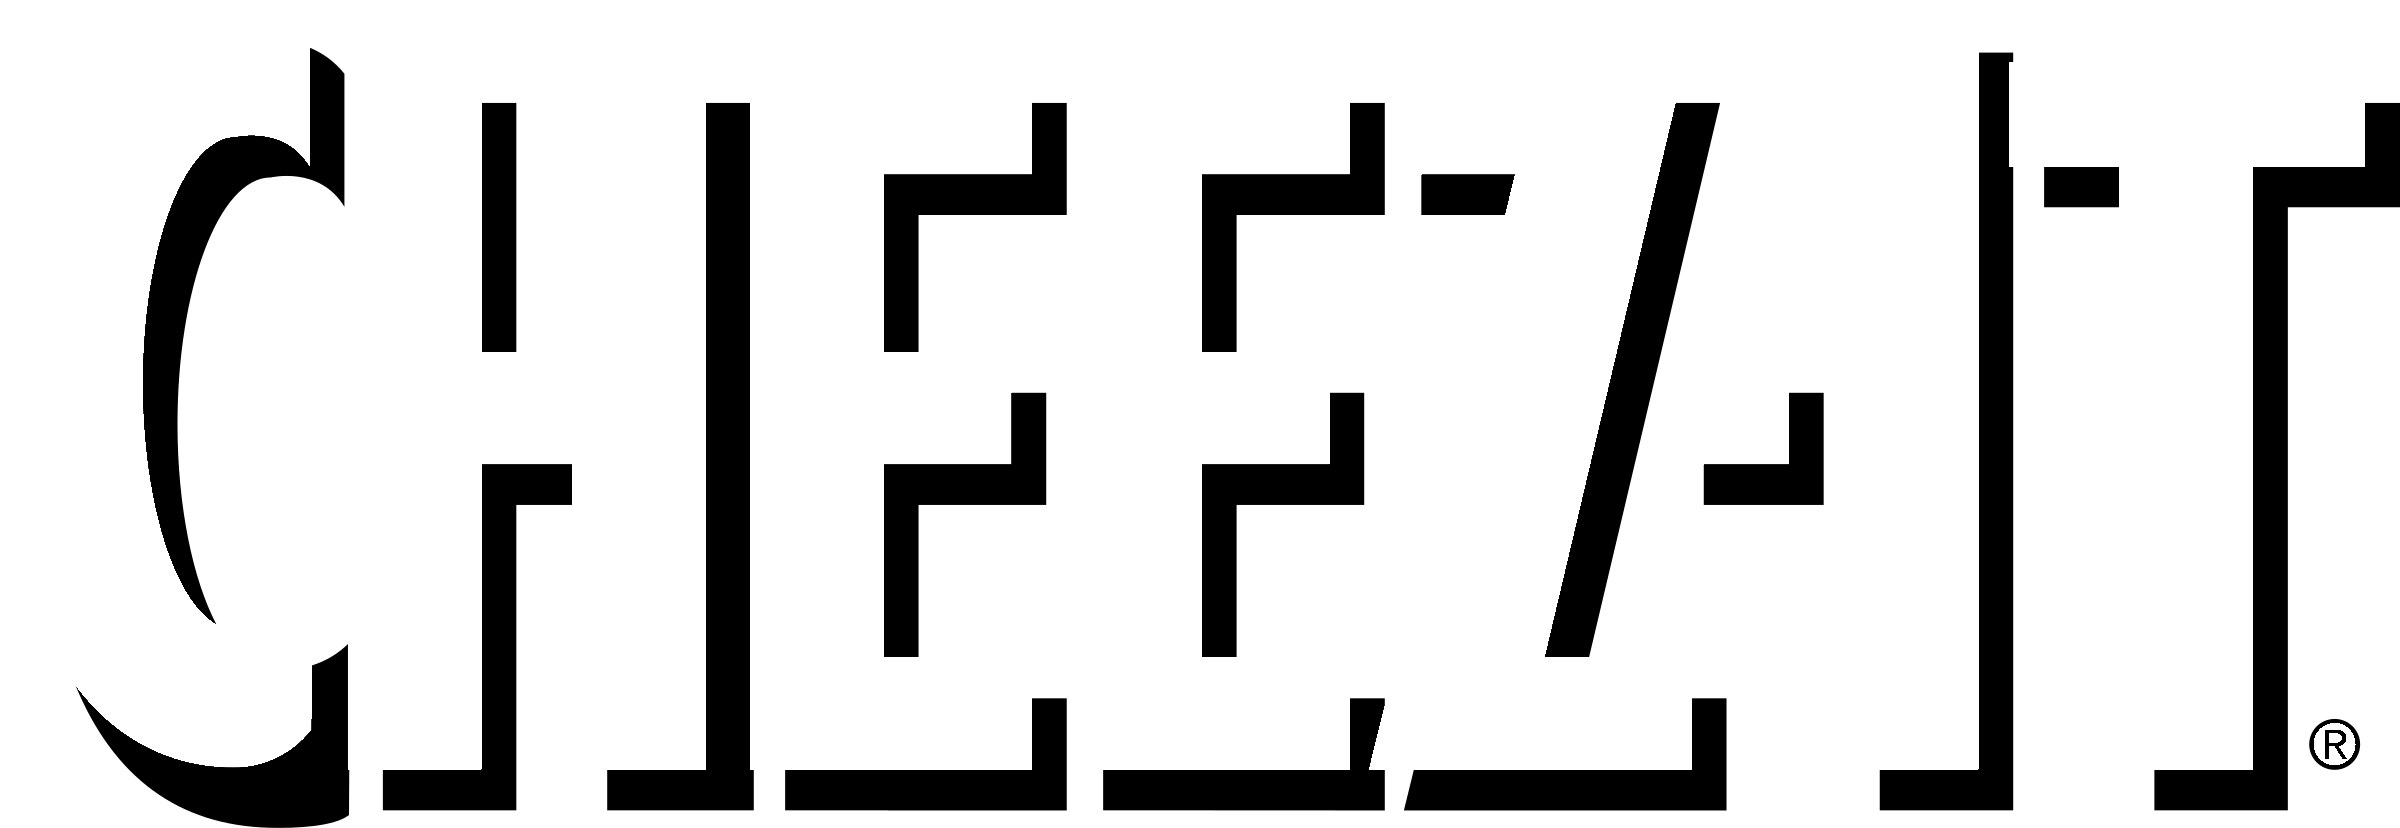 Cheez-It Logo - Cheezit Logo PNG Transparent & SVG Vector - Freebie Supply